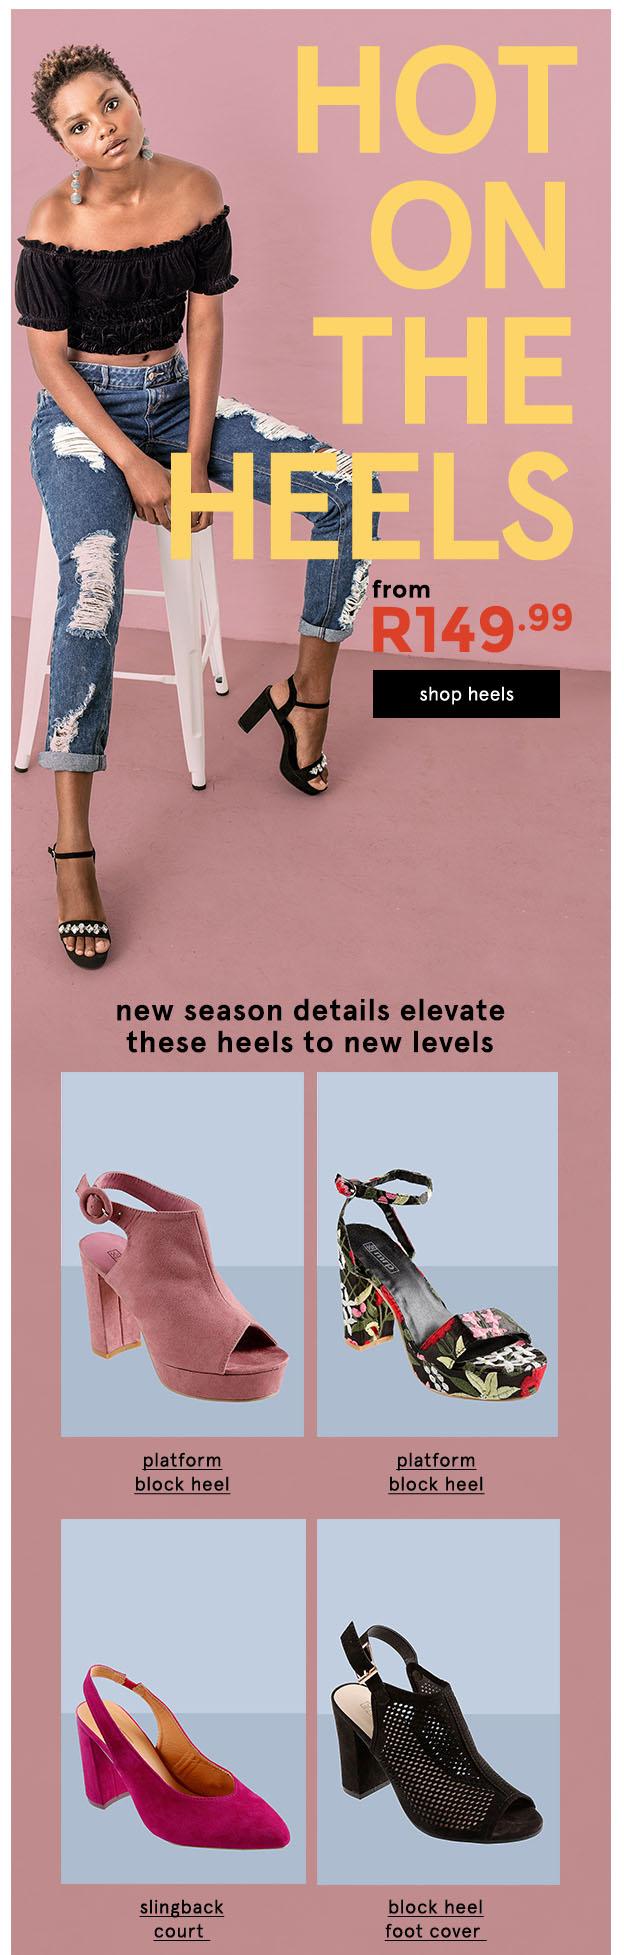 mr price heels for ladies